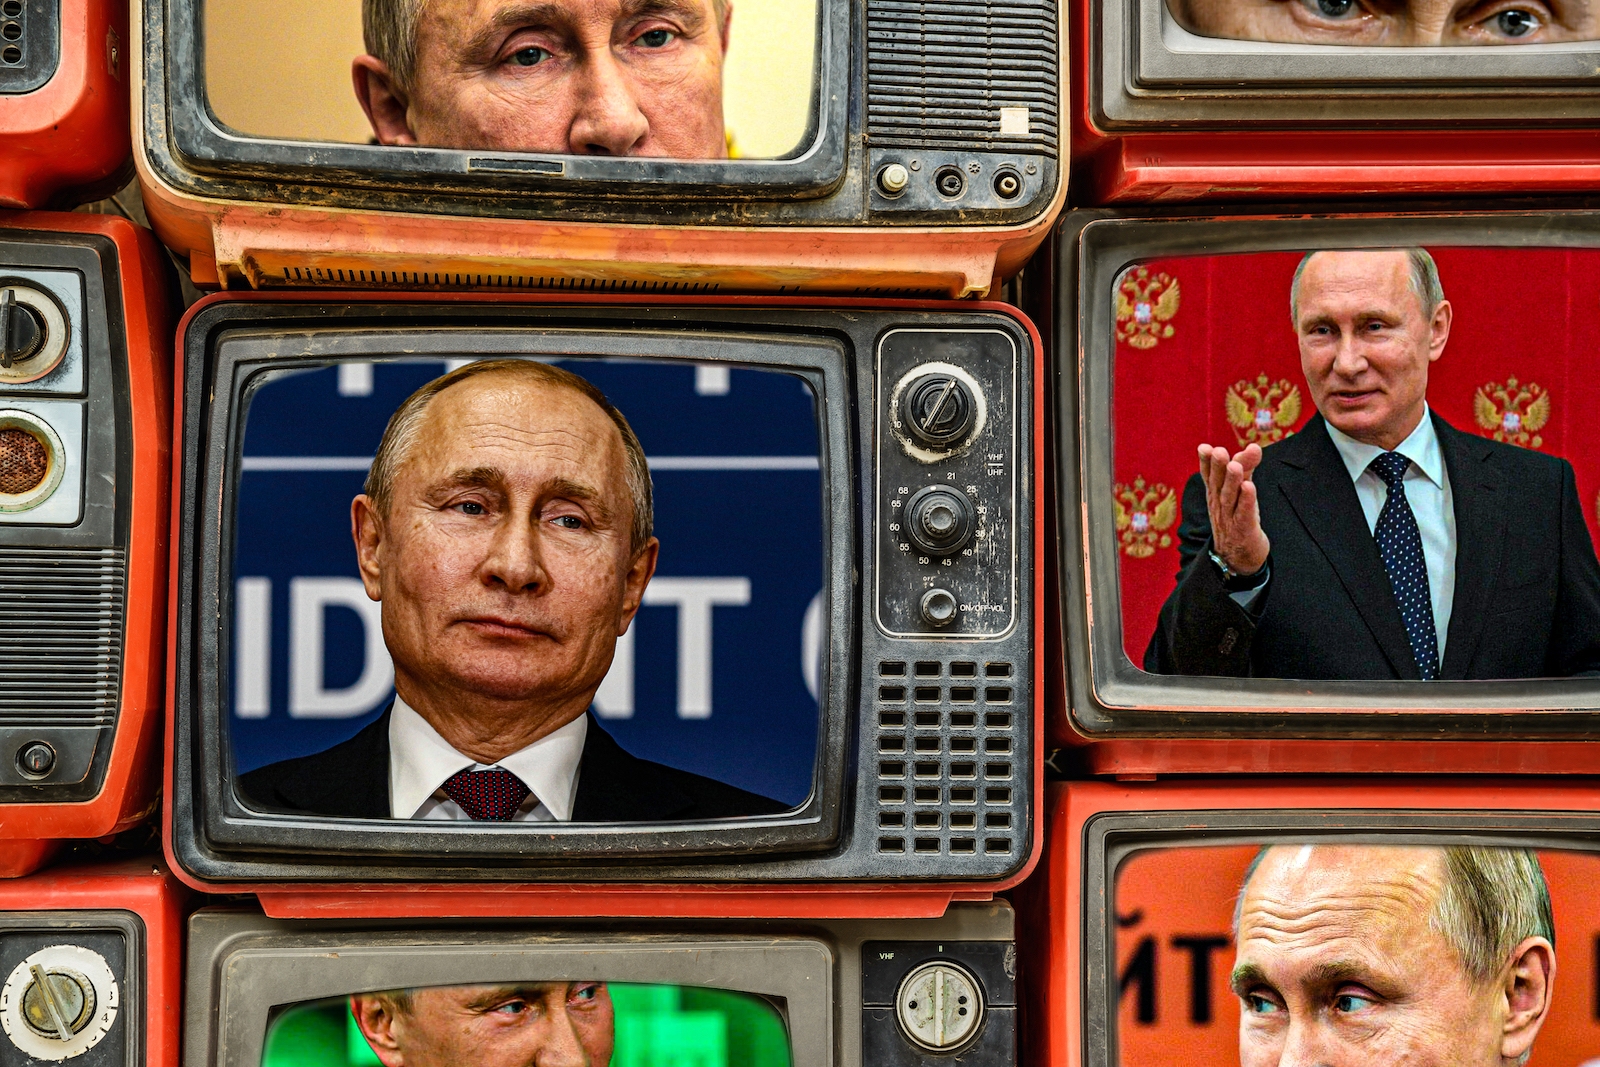 Vladimir Putin on television